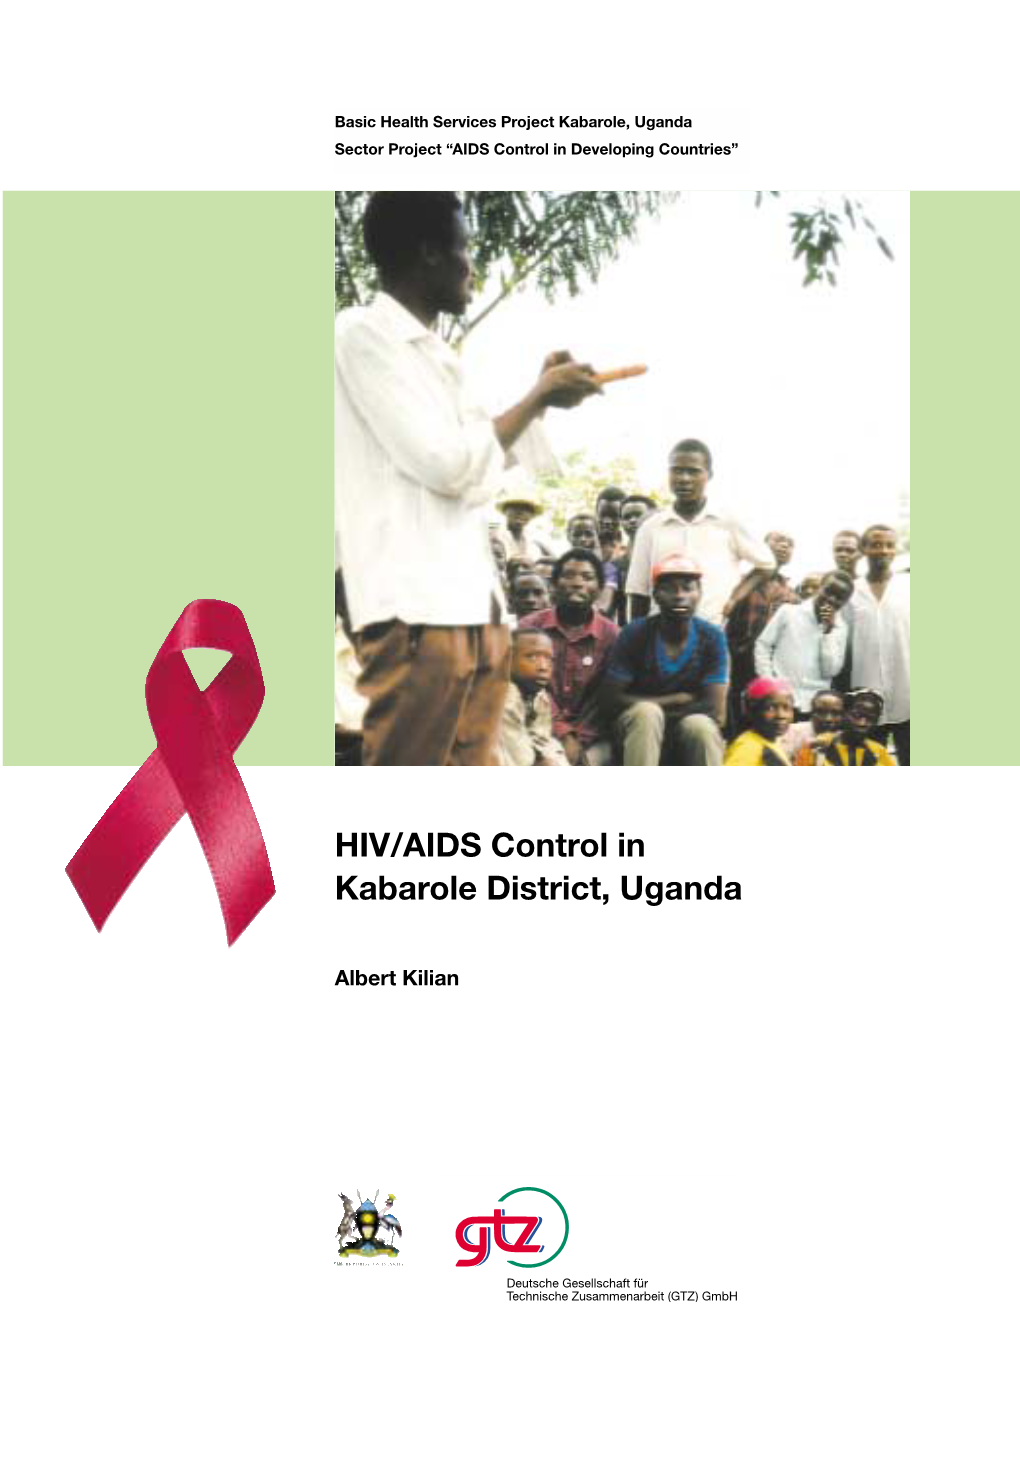 HIV/AIDS Control in Kabarole District, Uganda